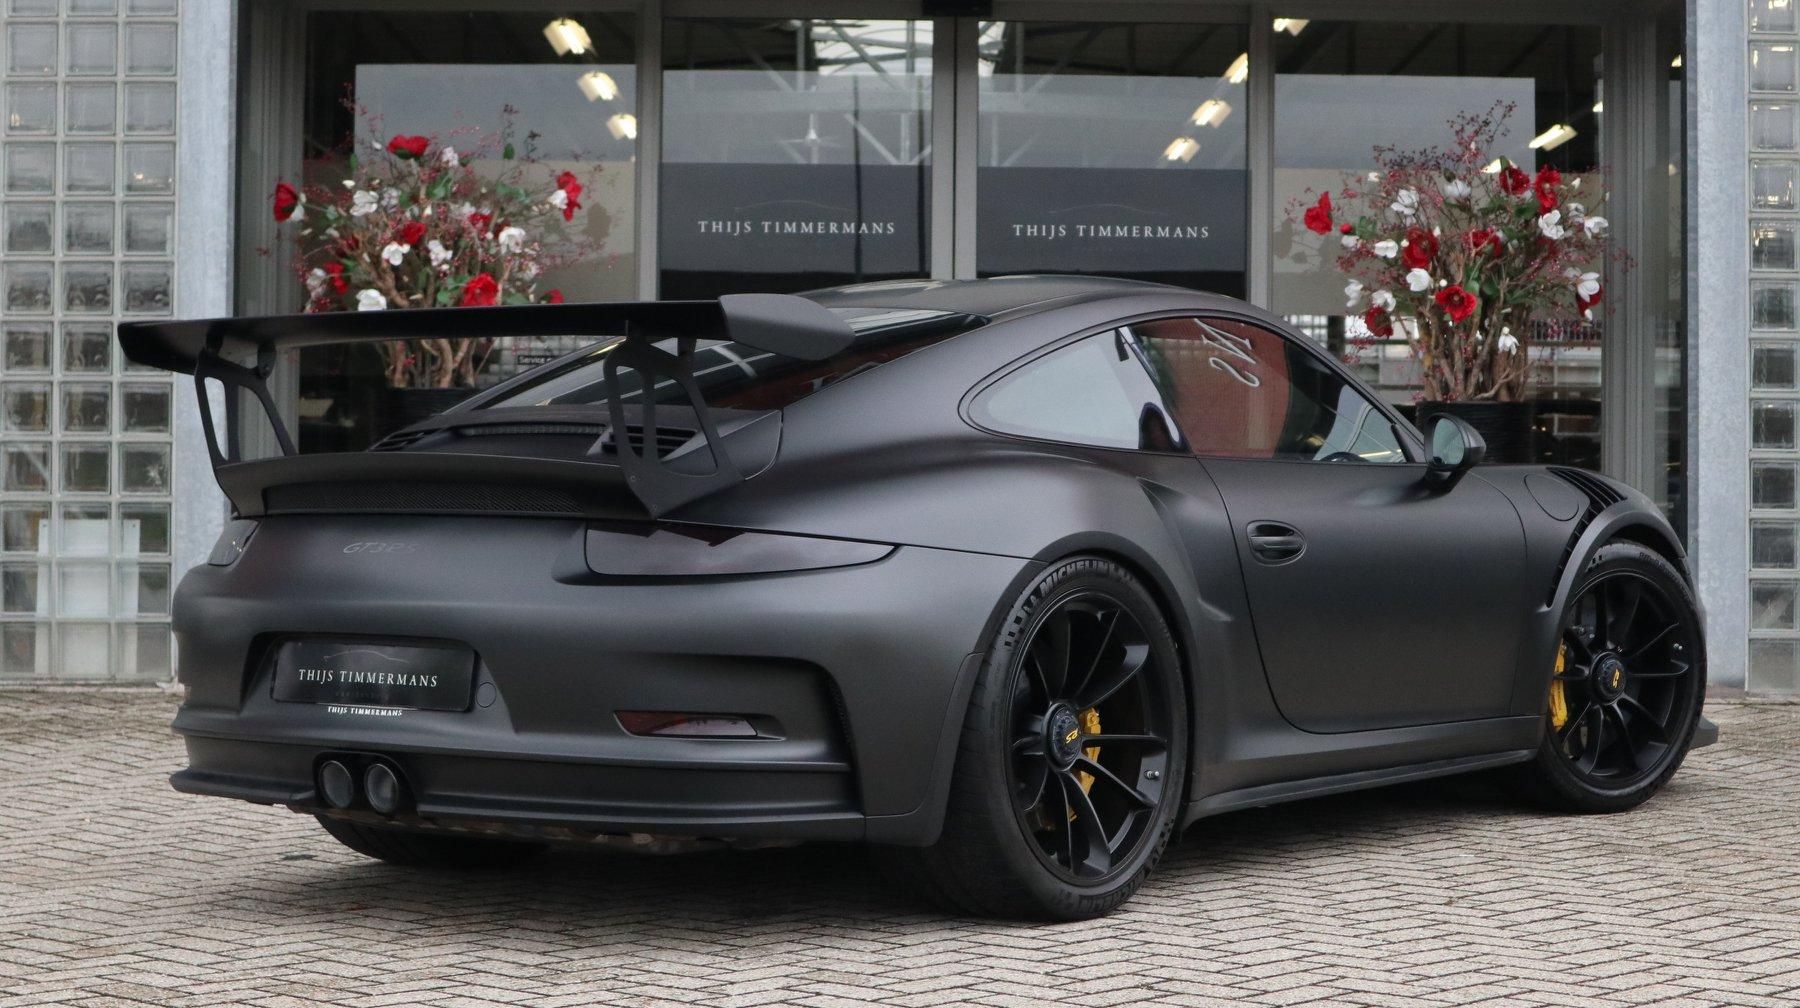 verdiepen precedent Motel Matzwarte Porsche 911 GT3 RS bezorgt nachtmerries - TopGear